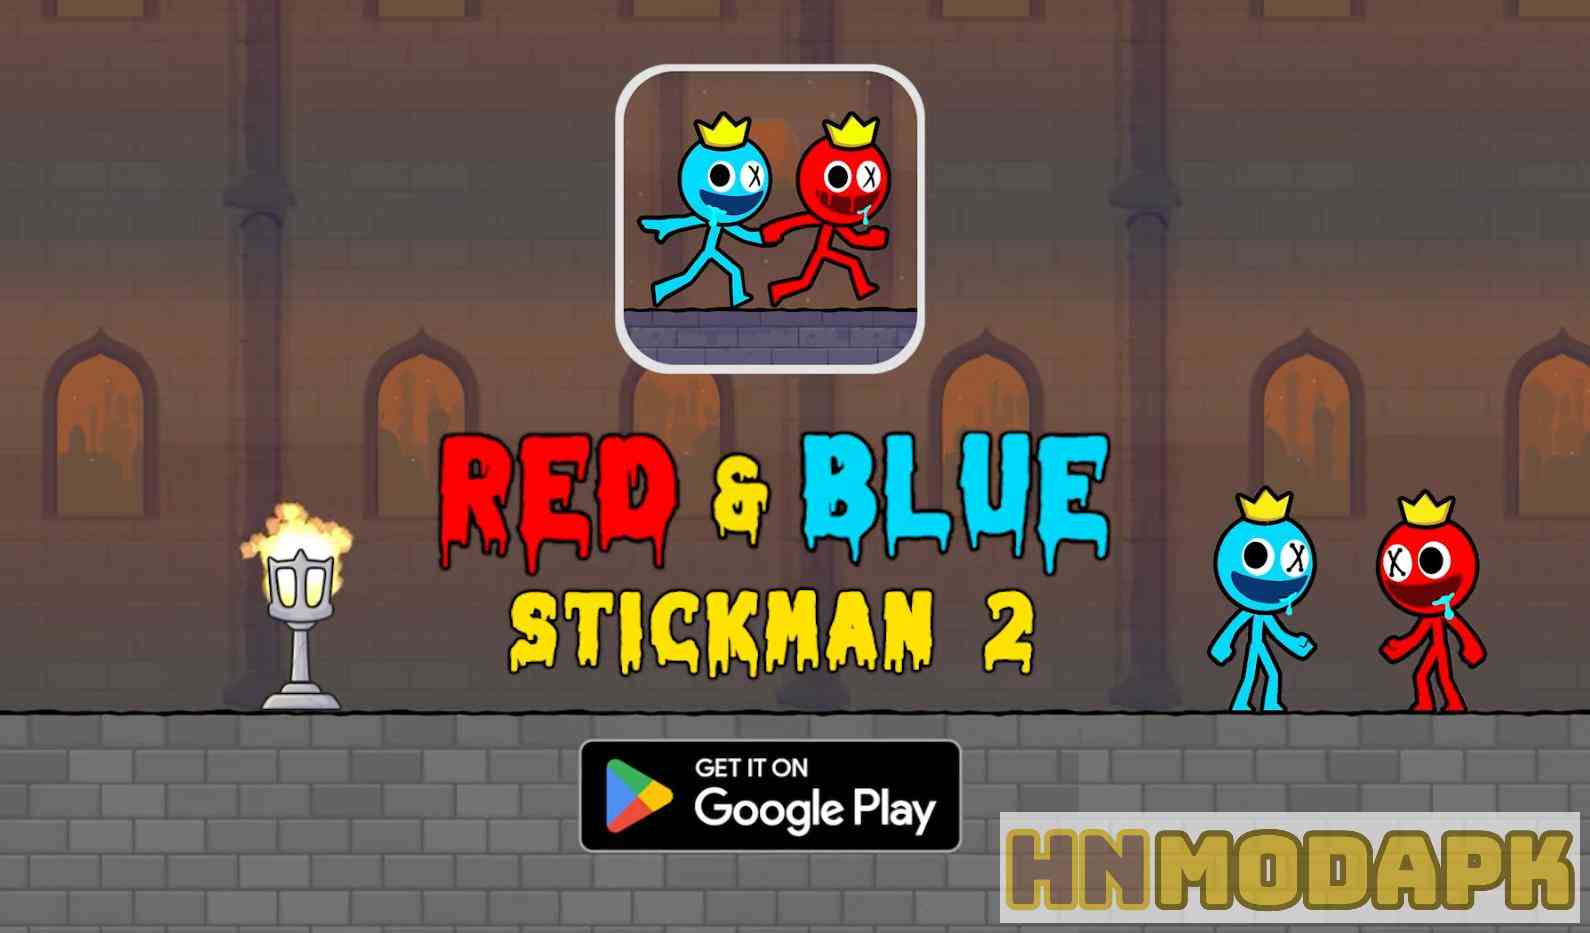 Hack Red and Blue Stickman 2 MOD (Pro Menu, Infinite Money, Levels, All Skins) APK 2.2.2